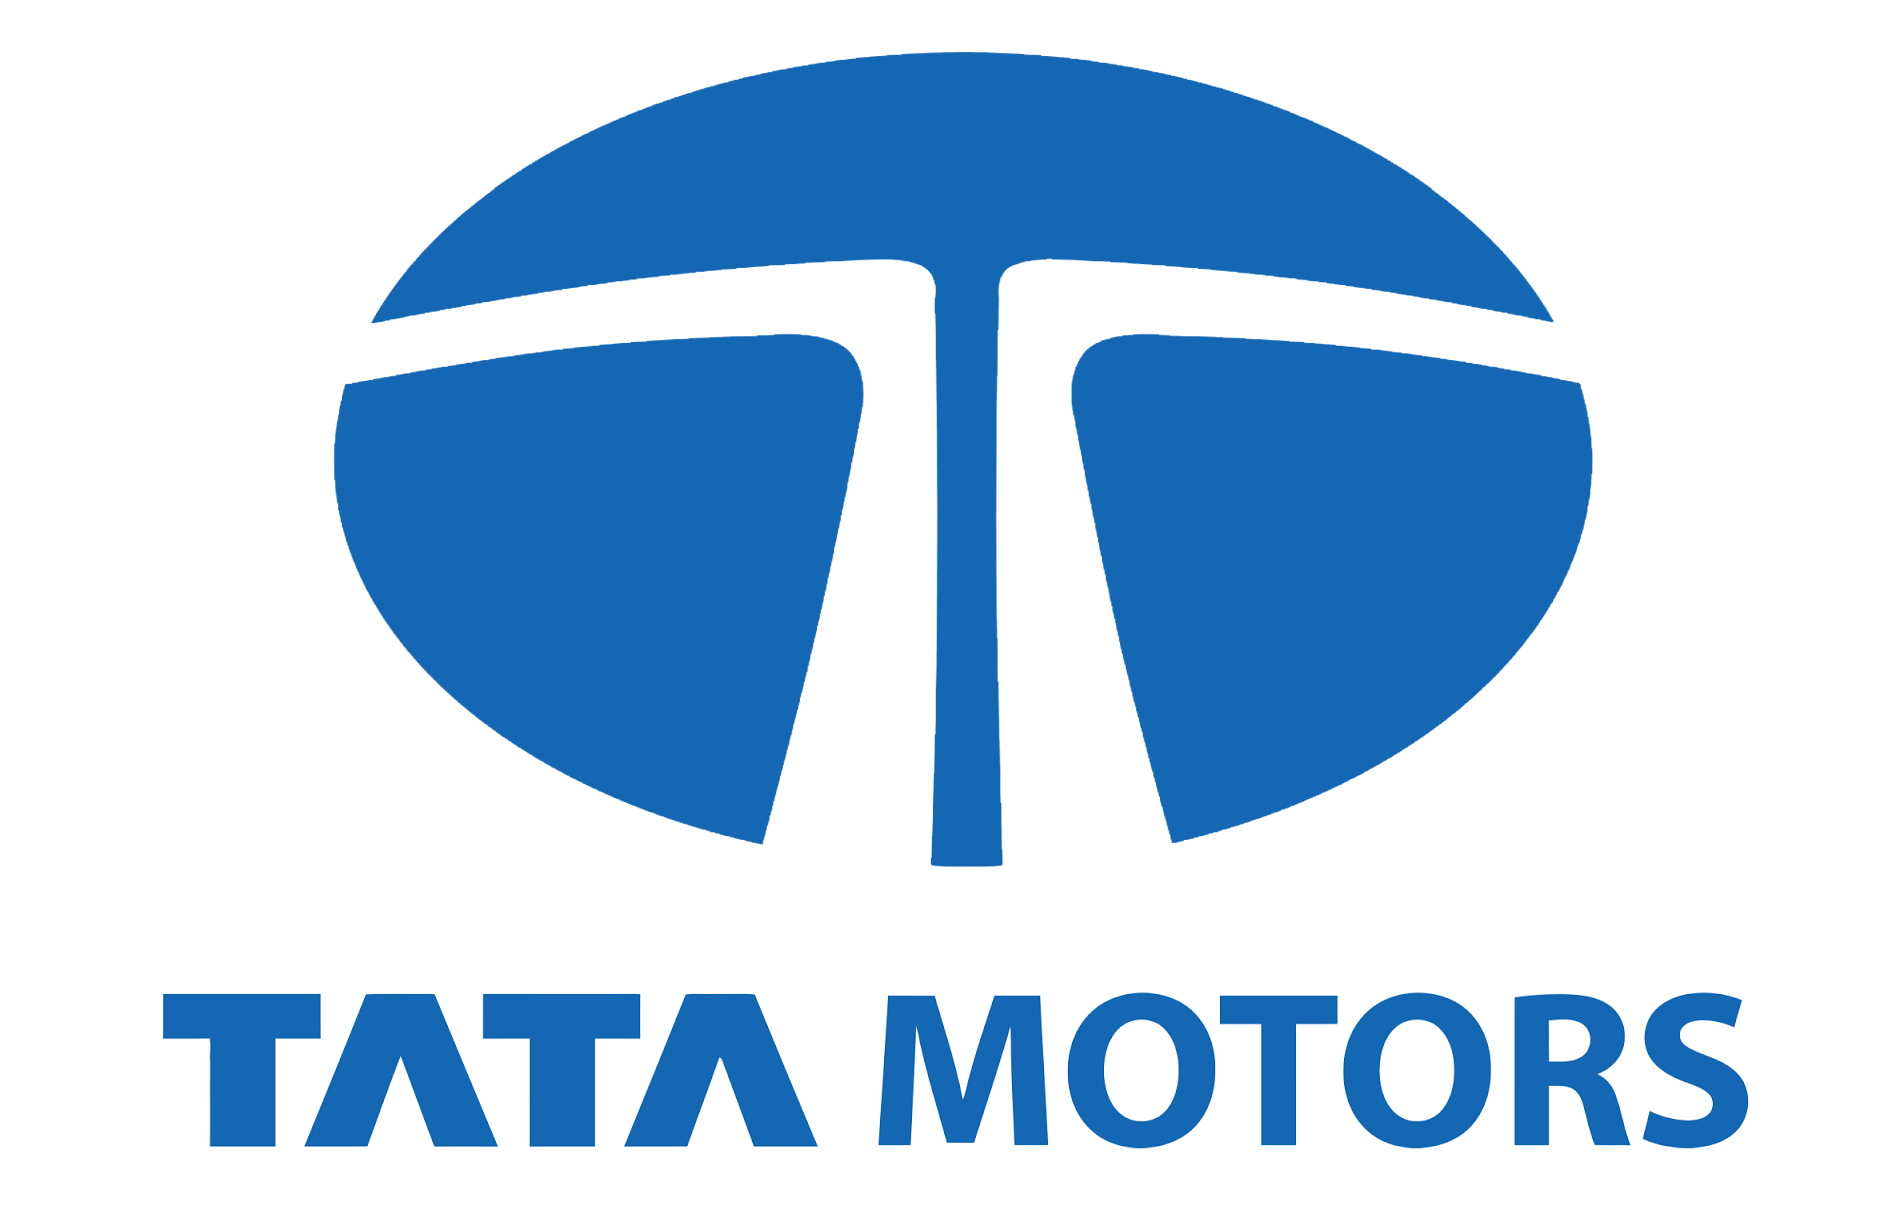 Tata Motors Cars Showroom - Sai Baba Autowheels|Show Room|Automotive